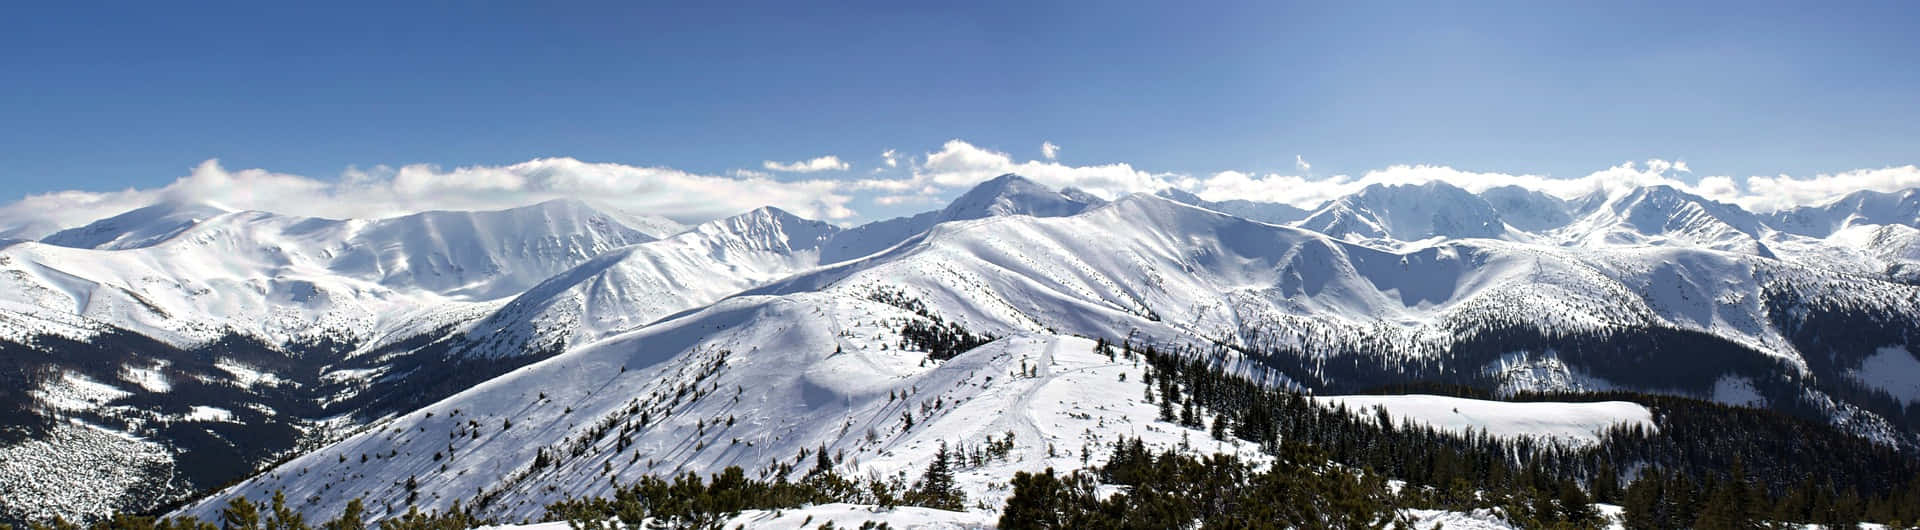 Snefyldte bjergkædeforløb panoramisk billedtapet